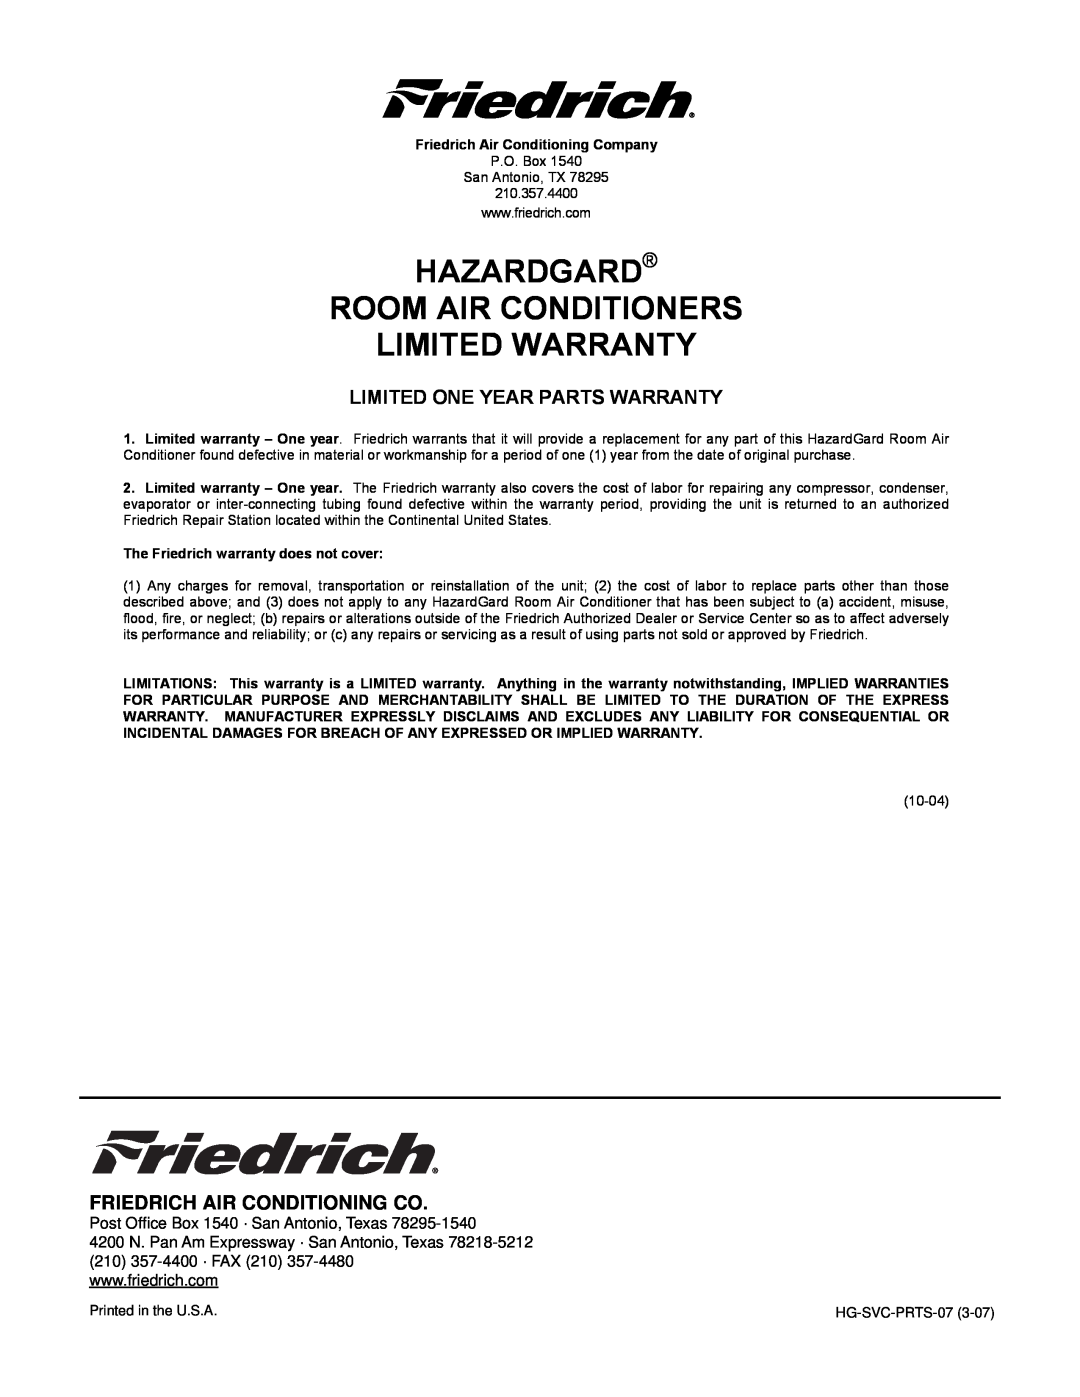 Friedrich 60 Hz manual Hazardgard Room Air Conditioners Limited Warranty, Limited One Year Parts Warranty 